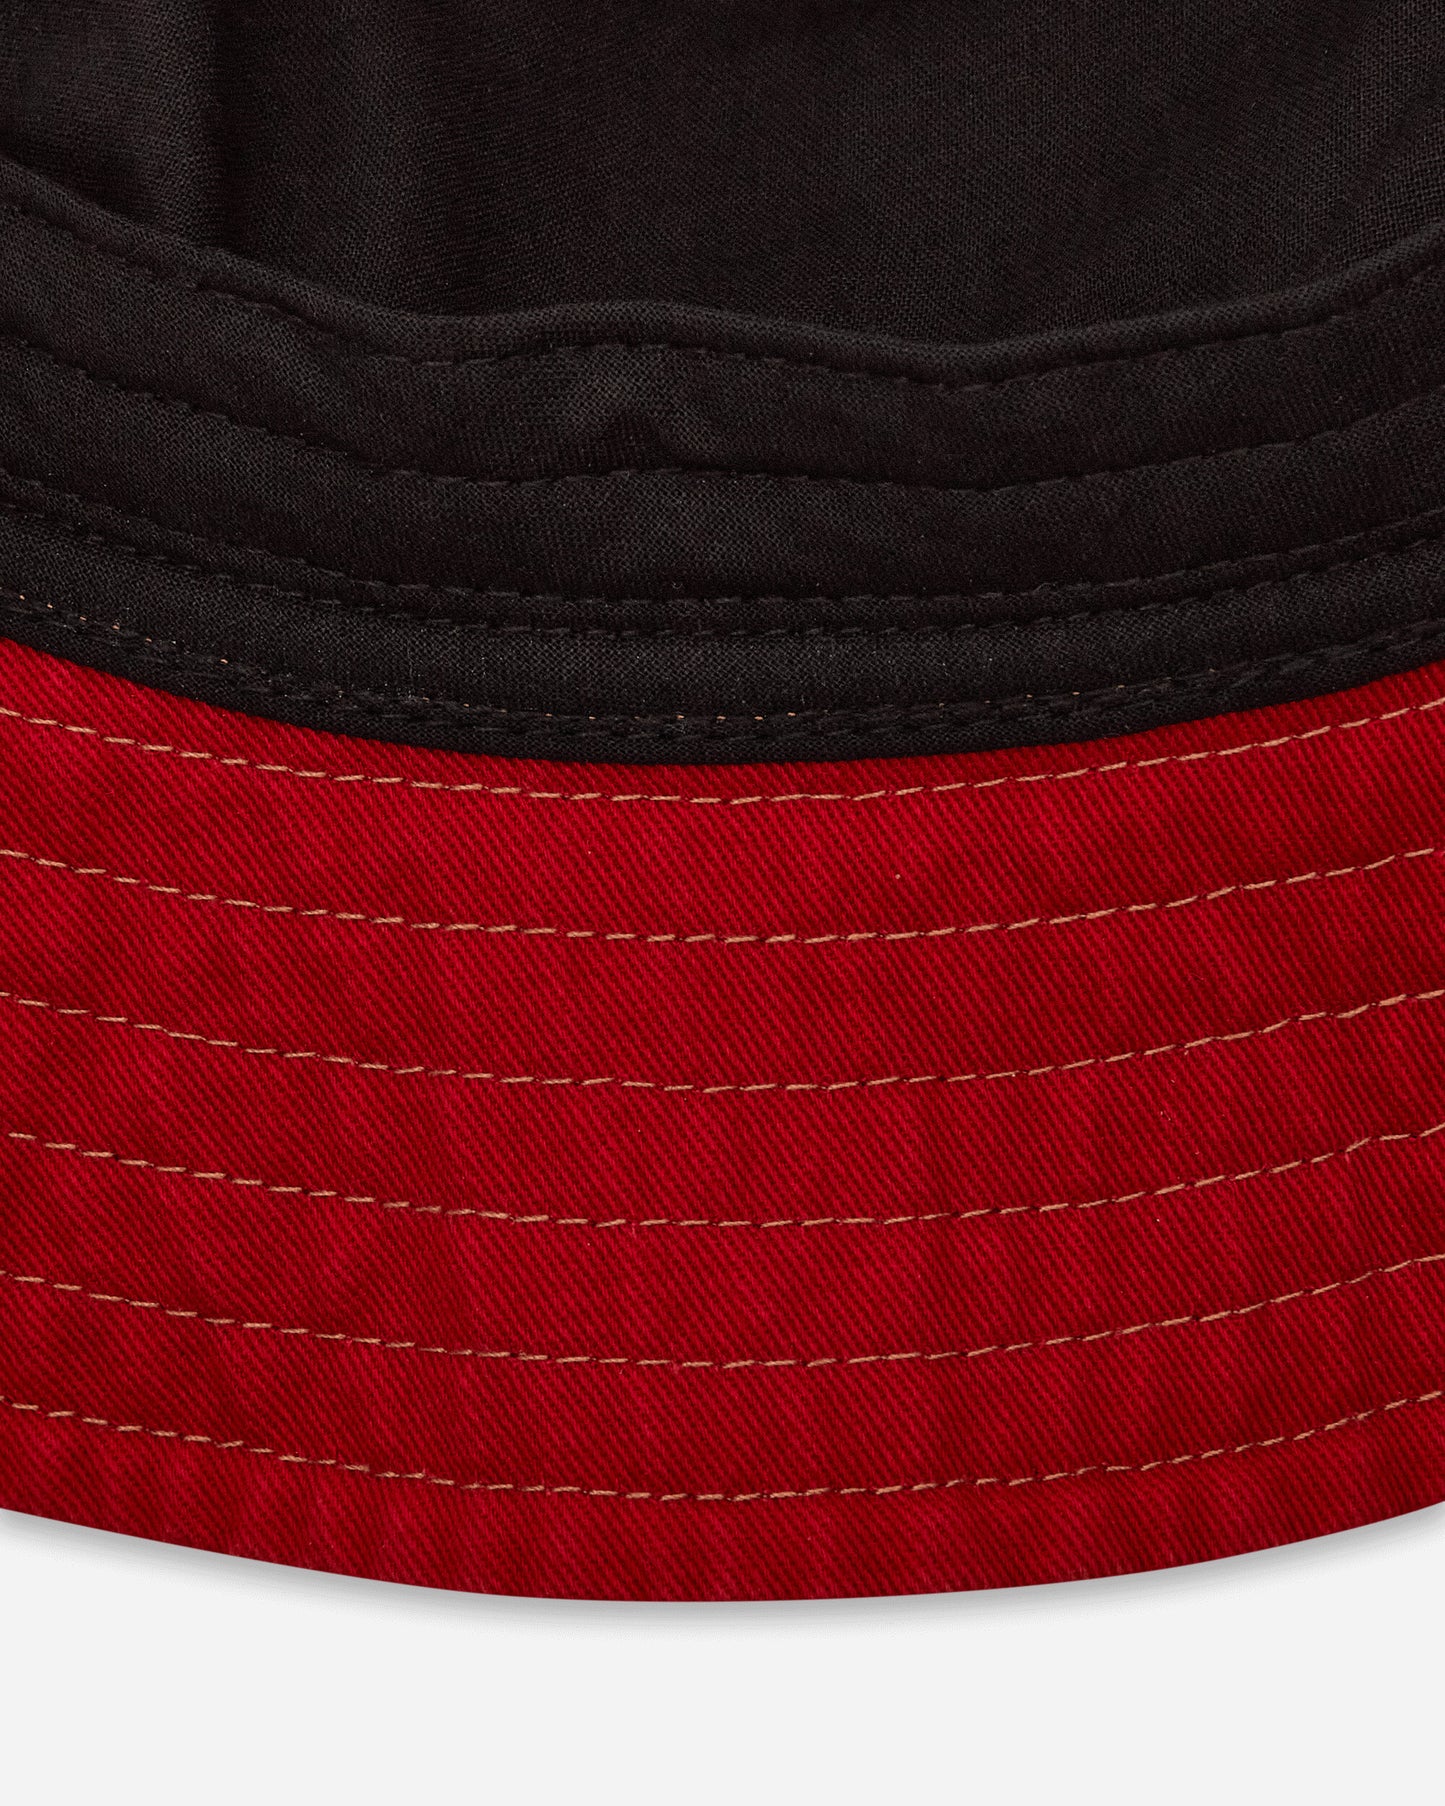 Carhartt WIP Heston Bucket Hat Hamilton Brown/Cherry Hats Bucket I032129 1OBXX